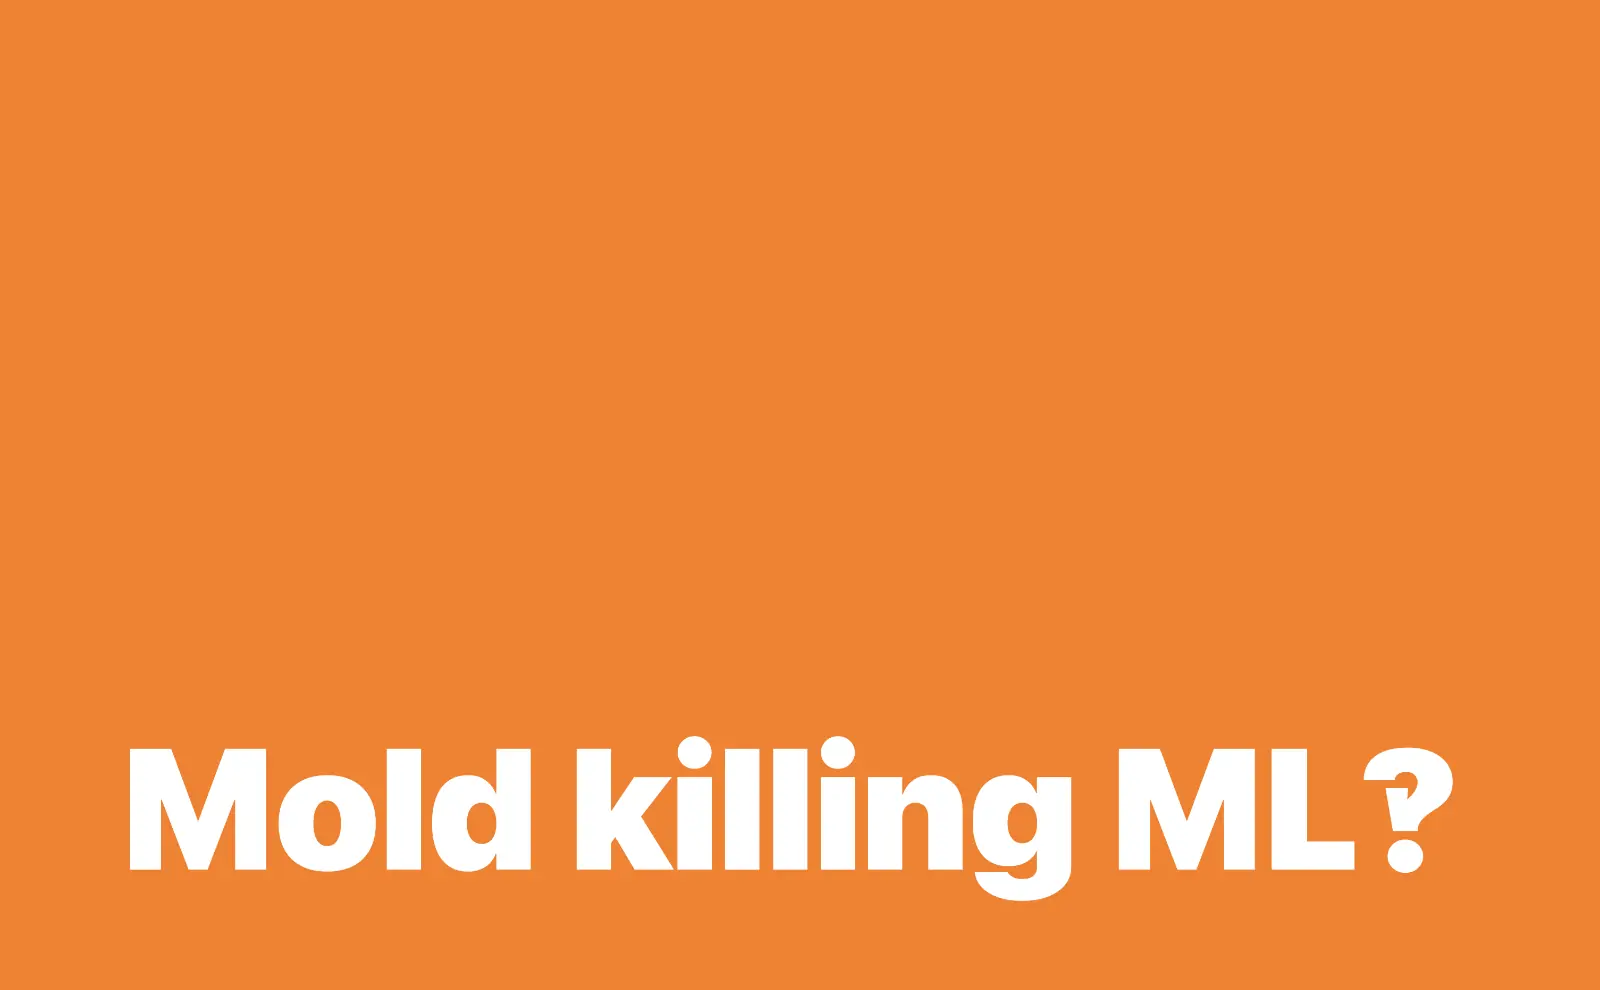 Mold killing ML‽